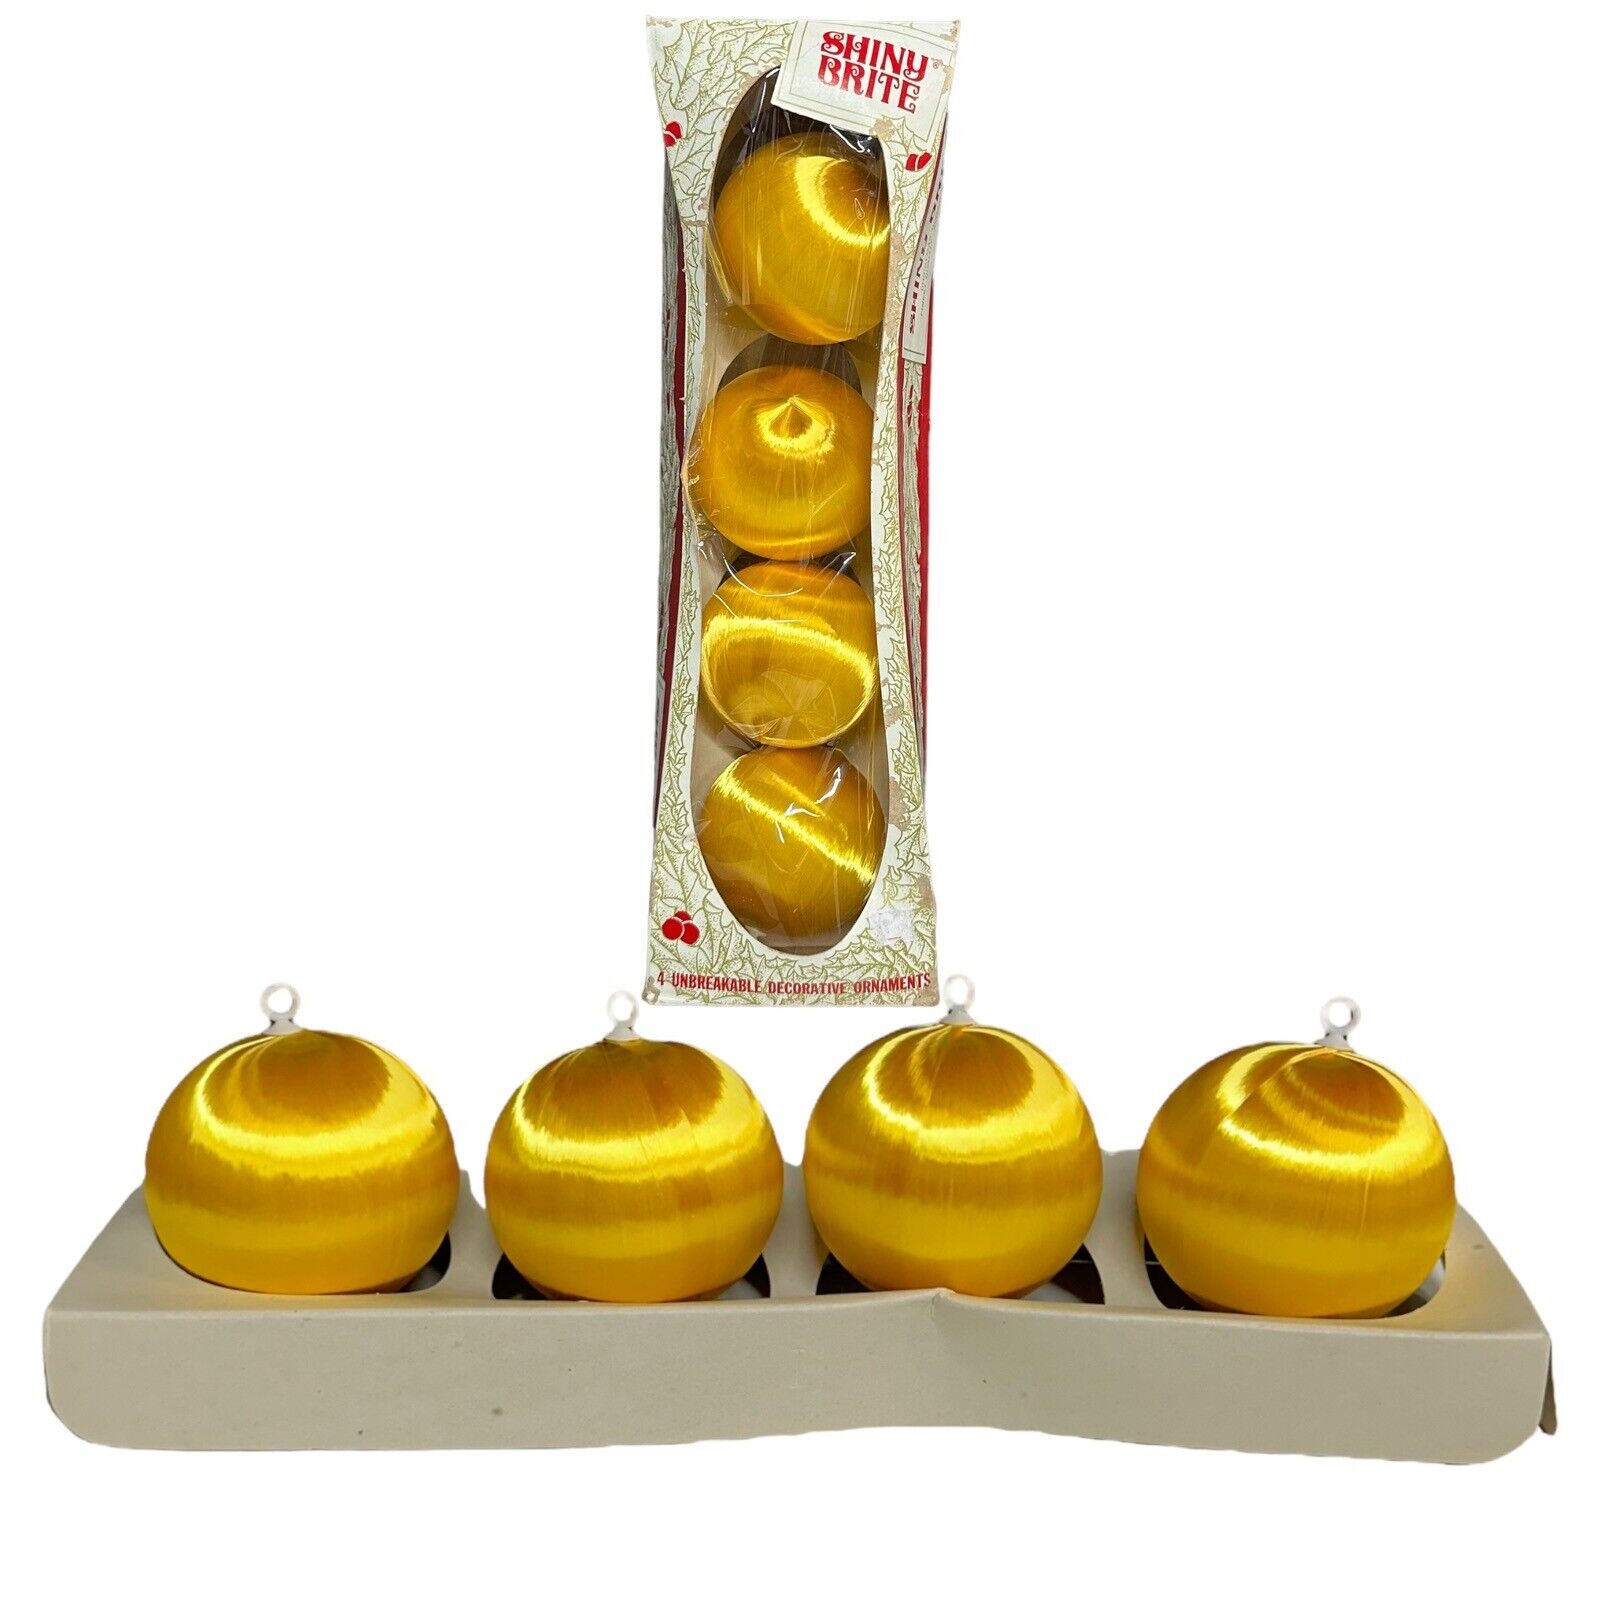 Shiny Brite Satin Spun SILK 3” Ornaments GOLD Orig Box SET OF 4 VTG Christmas